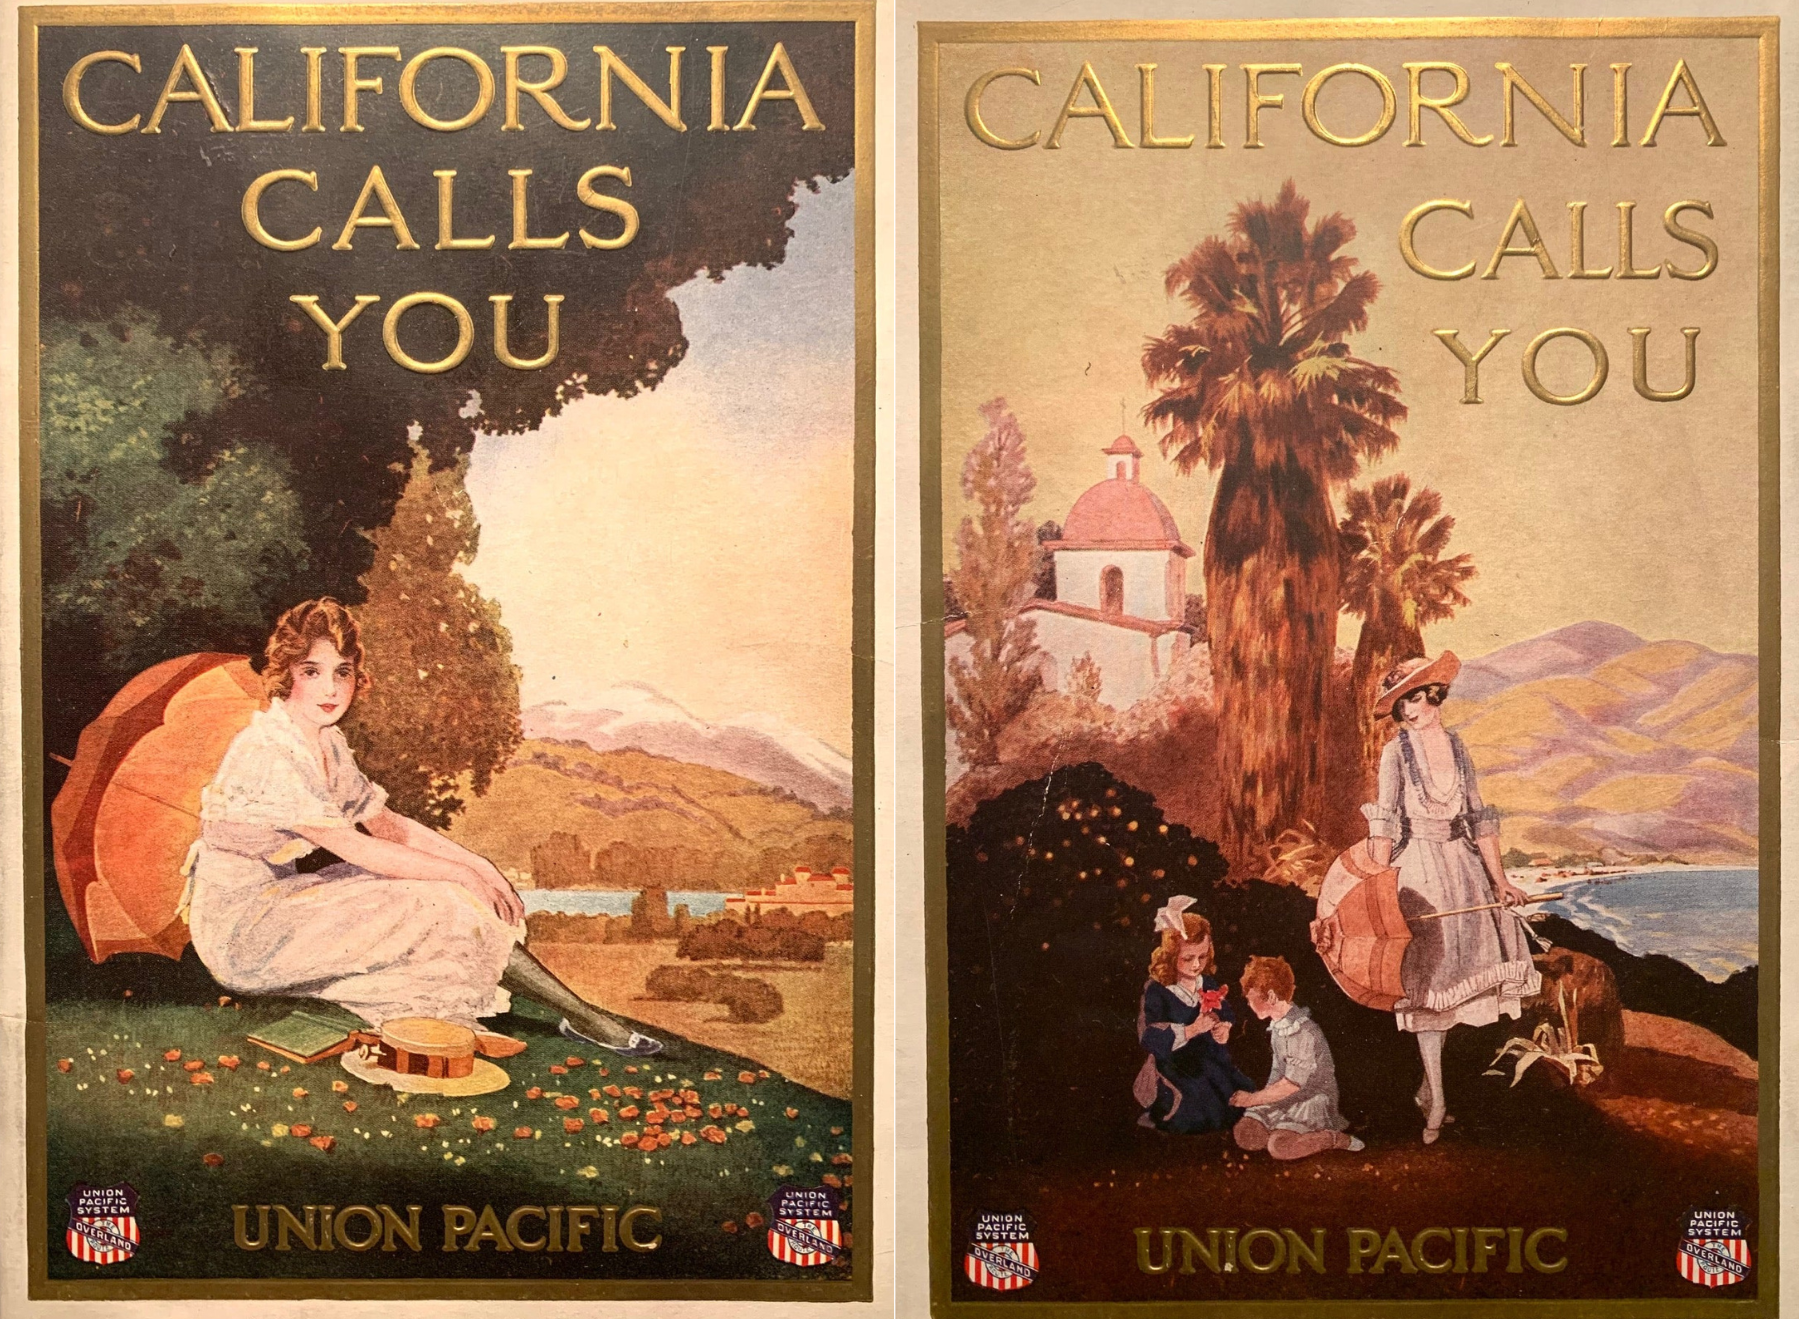 1923 Union Pacific Railroad Promotional Pamphlet